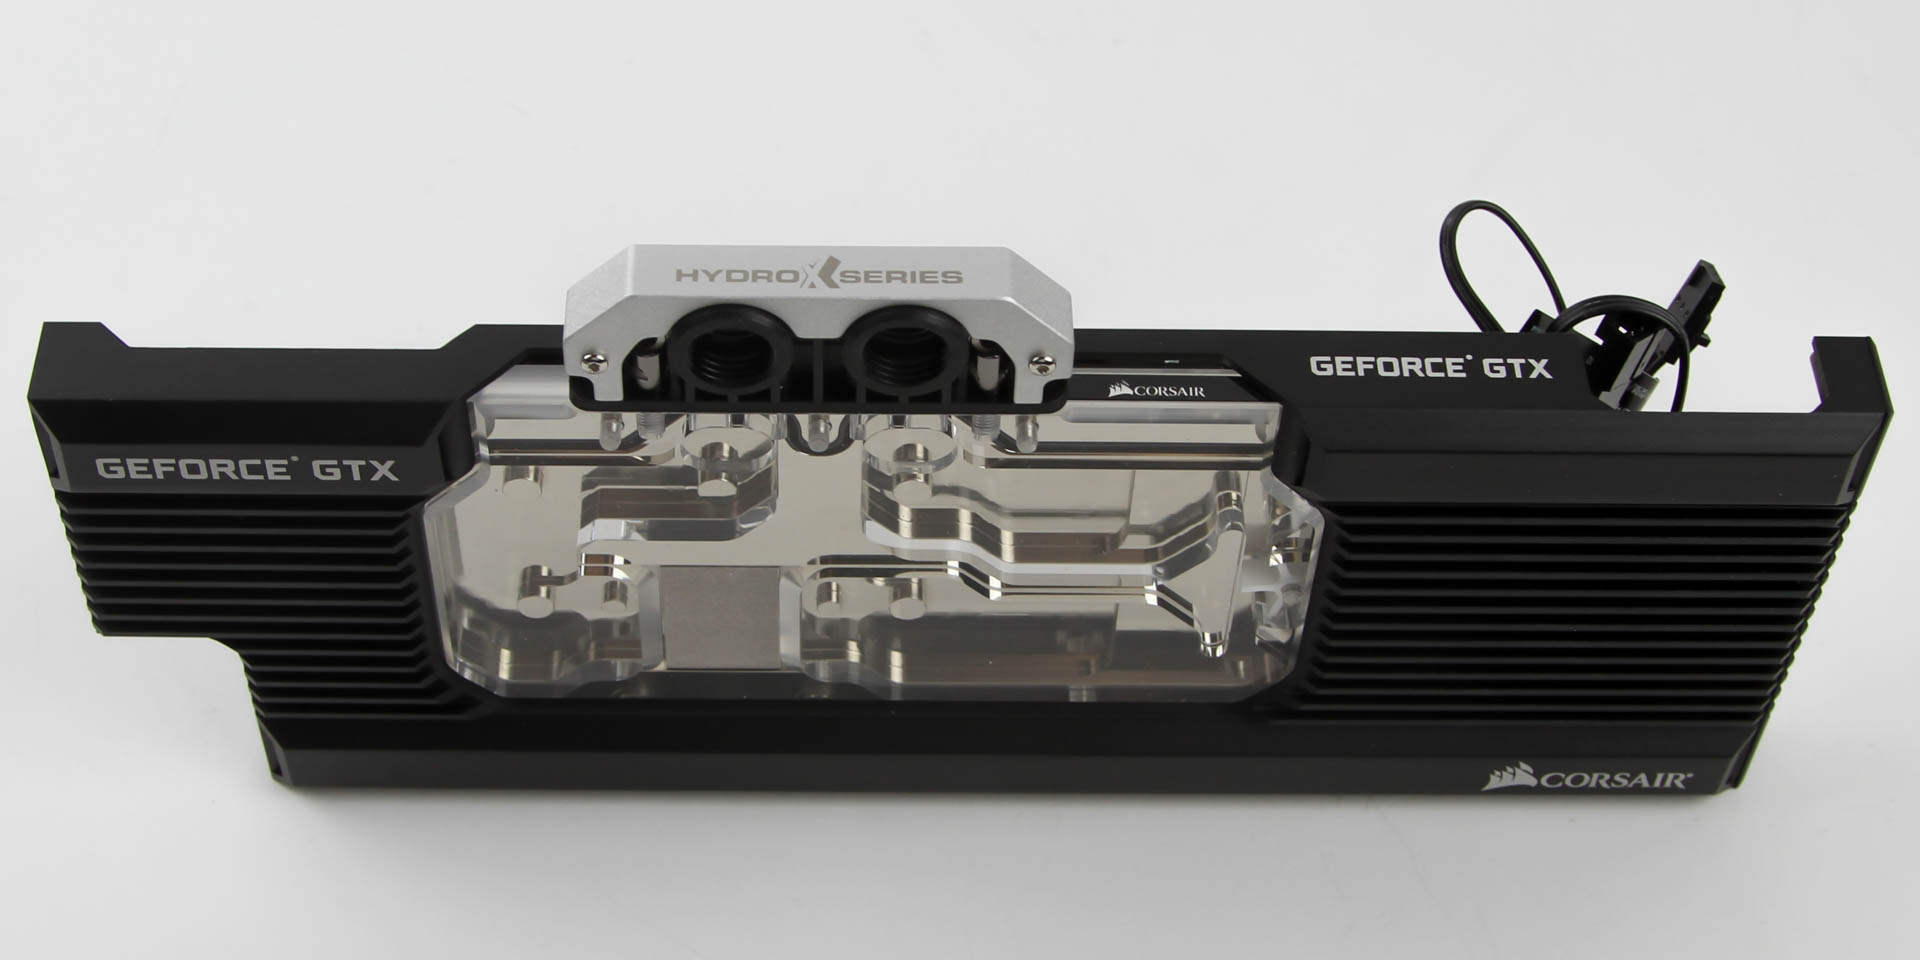 CORSAIR Hydro X Series XG7 RGB GPU Water Block Review - Closer Examination | TechPowerUp